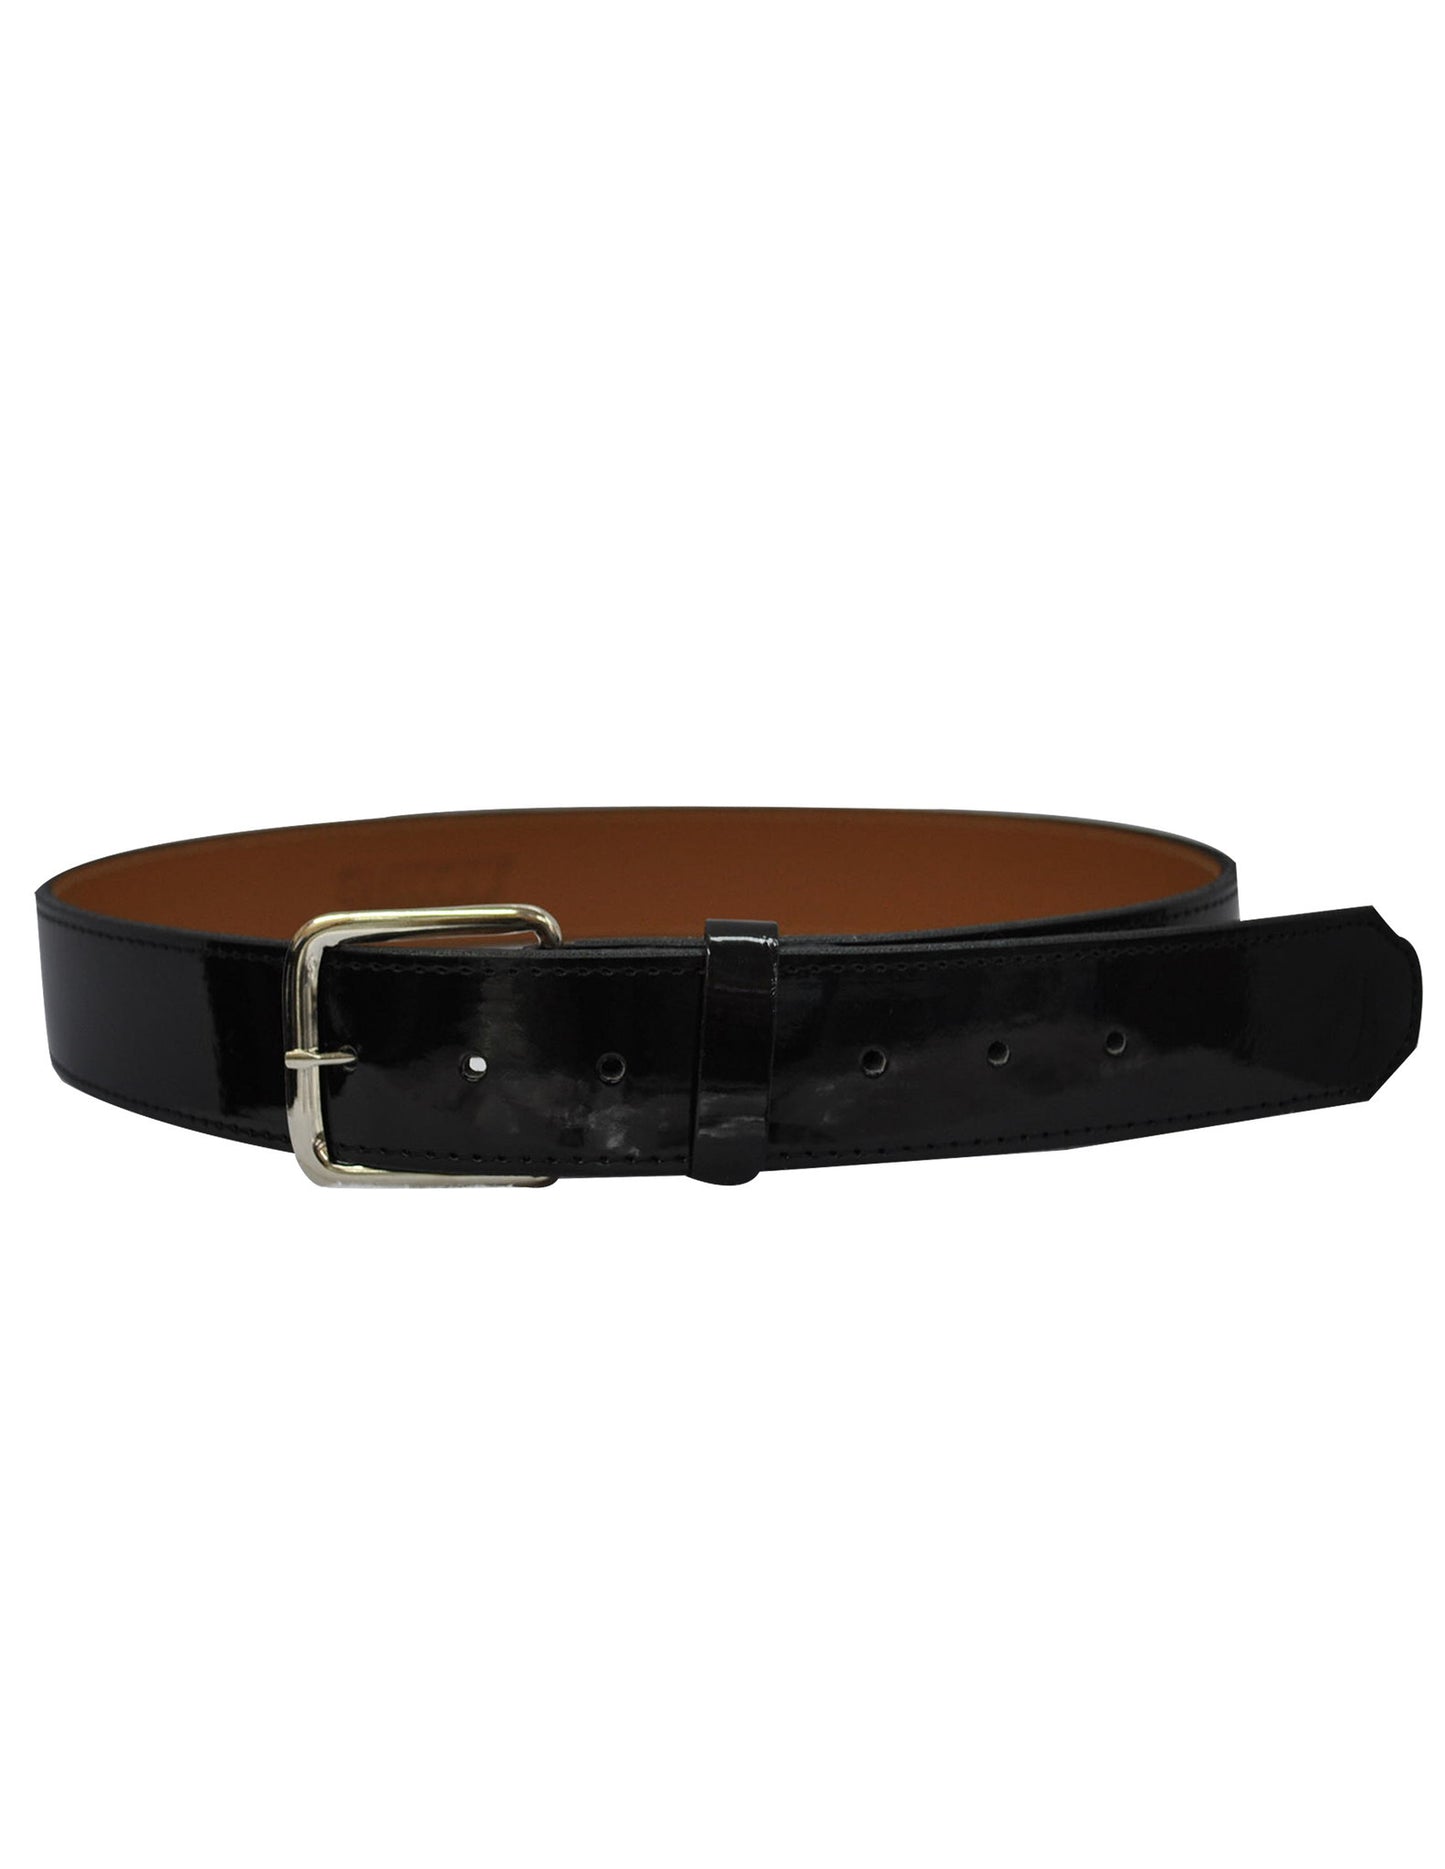 ACS580-Patent Leather 1 1/2" Black Belt